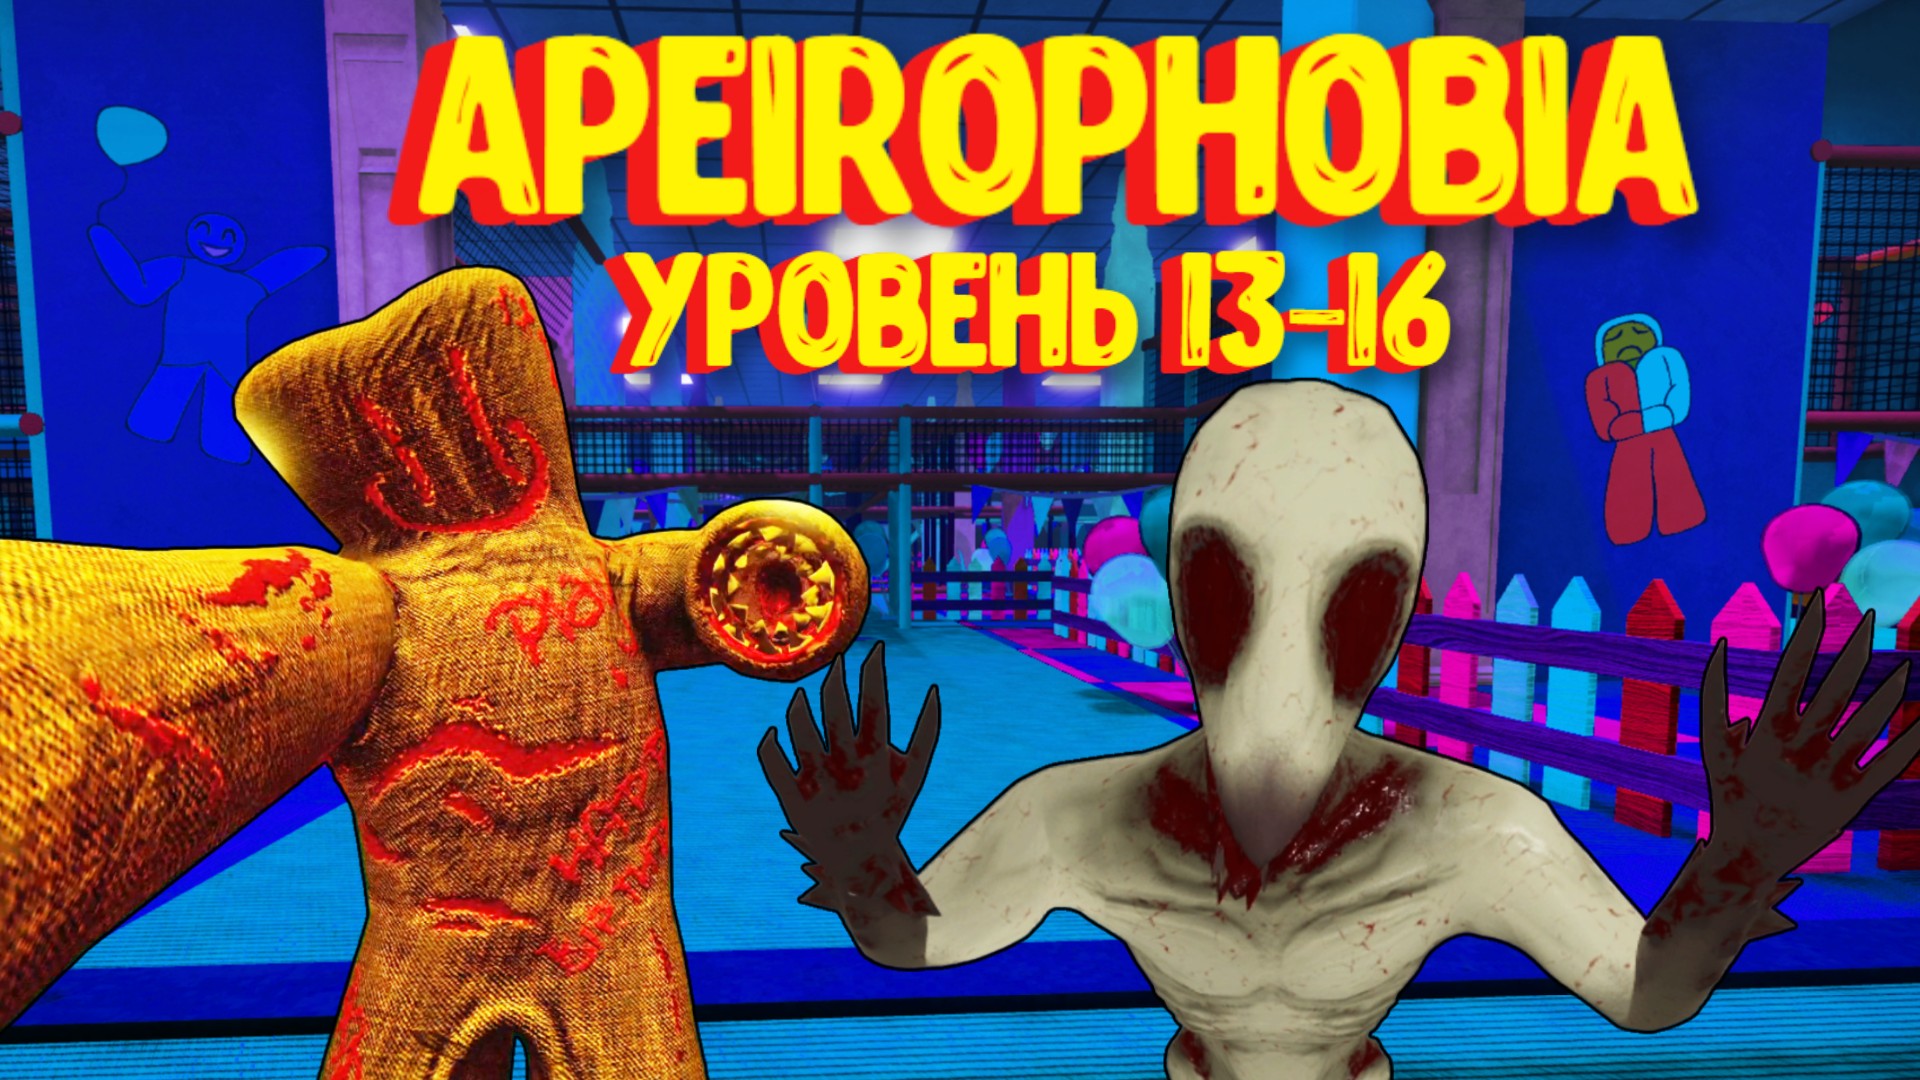 Apeirophobia level 4 monster